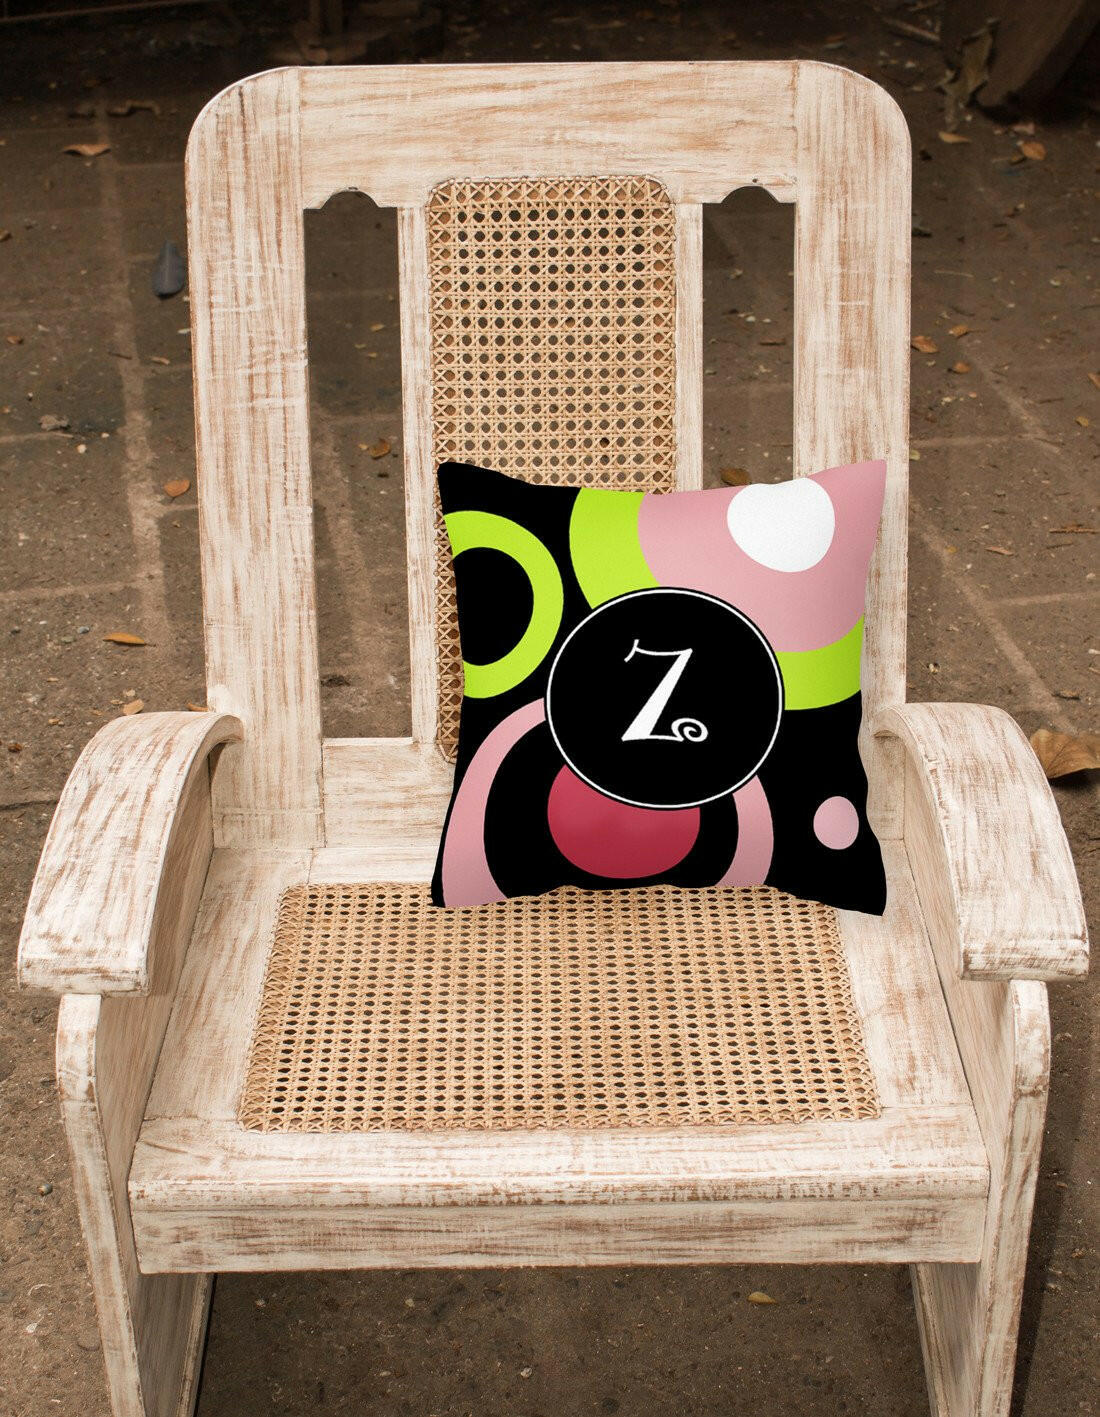 Letter Z Monogram - Retro in Black Fabric Decorative Pillow AM1002-ZPW1414 - the-store.com